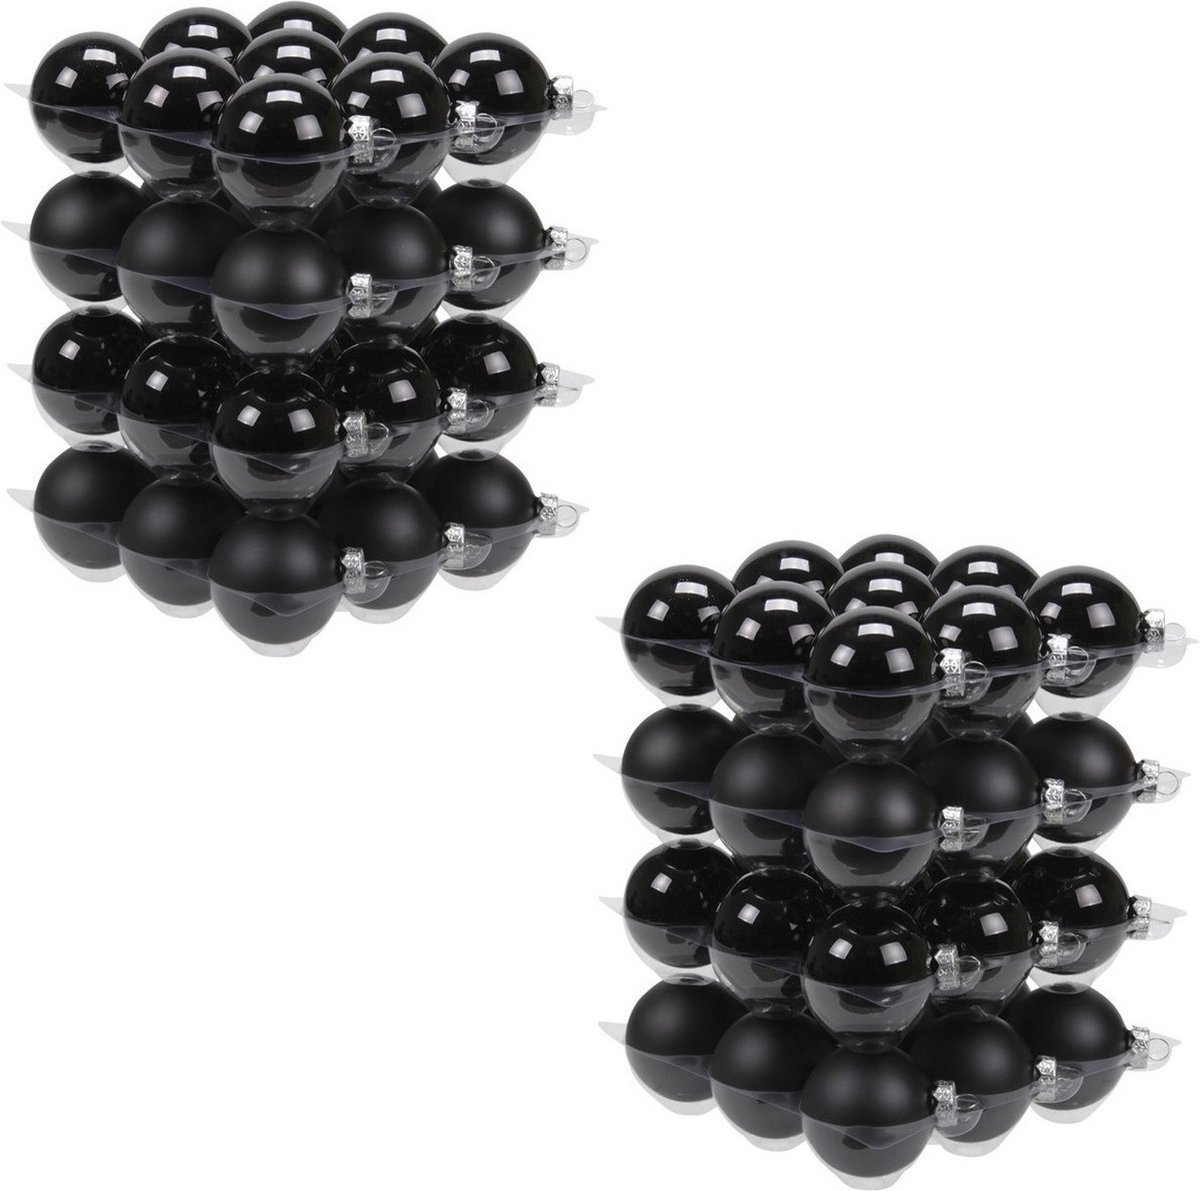 72x Zwarte glazen kerstballen 6 cm - mat/glans - Kerstboomversiering zwart mat en glanzend